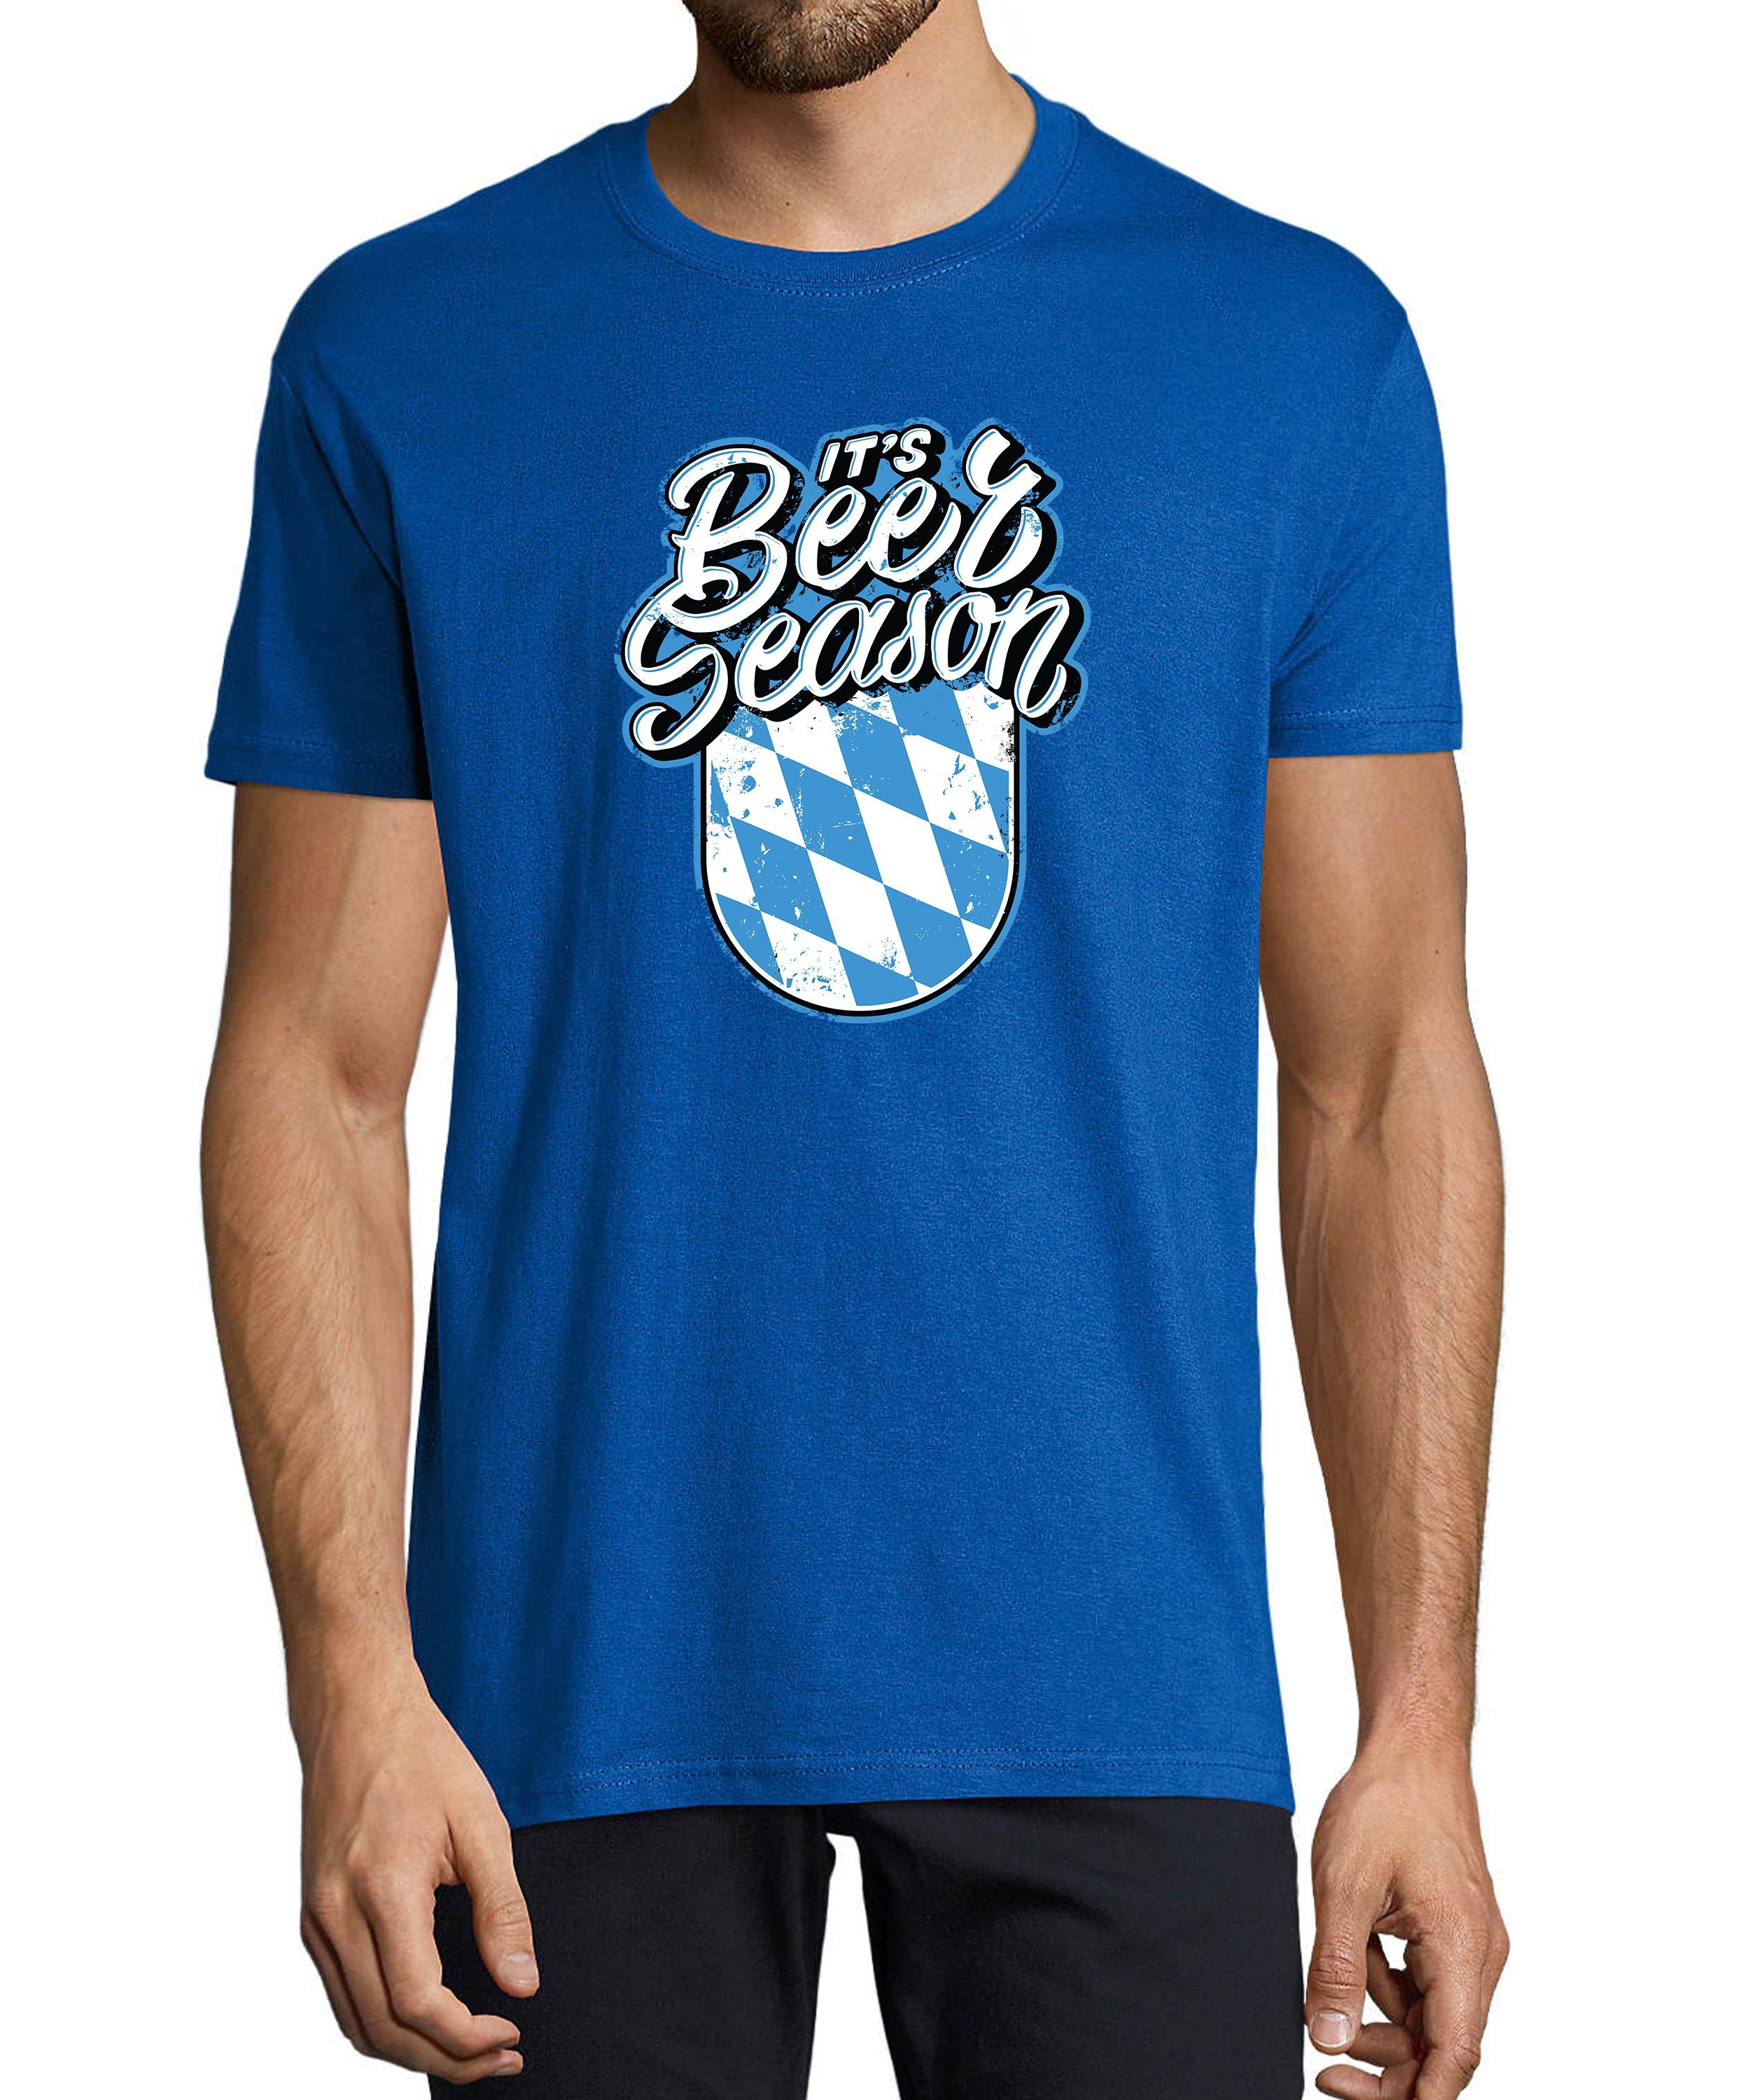 MyDesign24 T-Shirt Herren Fun Print Shirt - Oktoberfest Trinkshirt its Beer Season Baumwollshirt mit Aufdruck Regular Fit, i303 royal blau